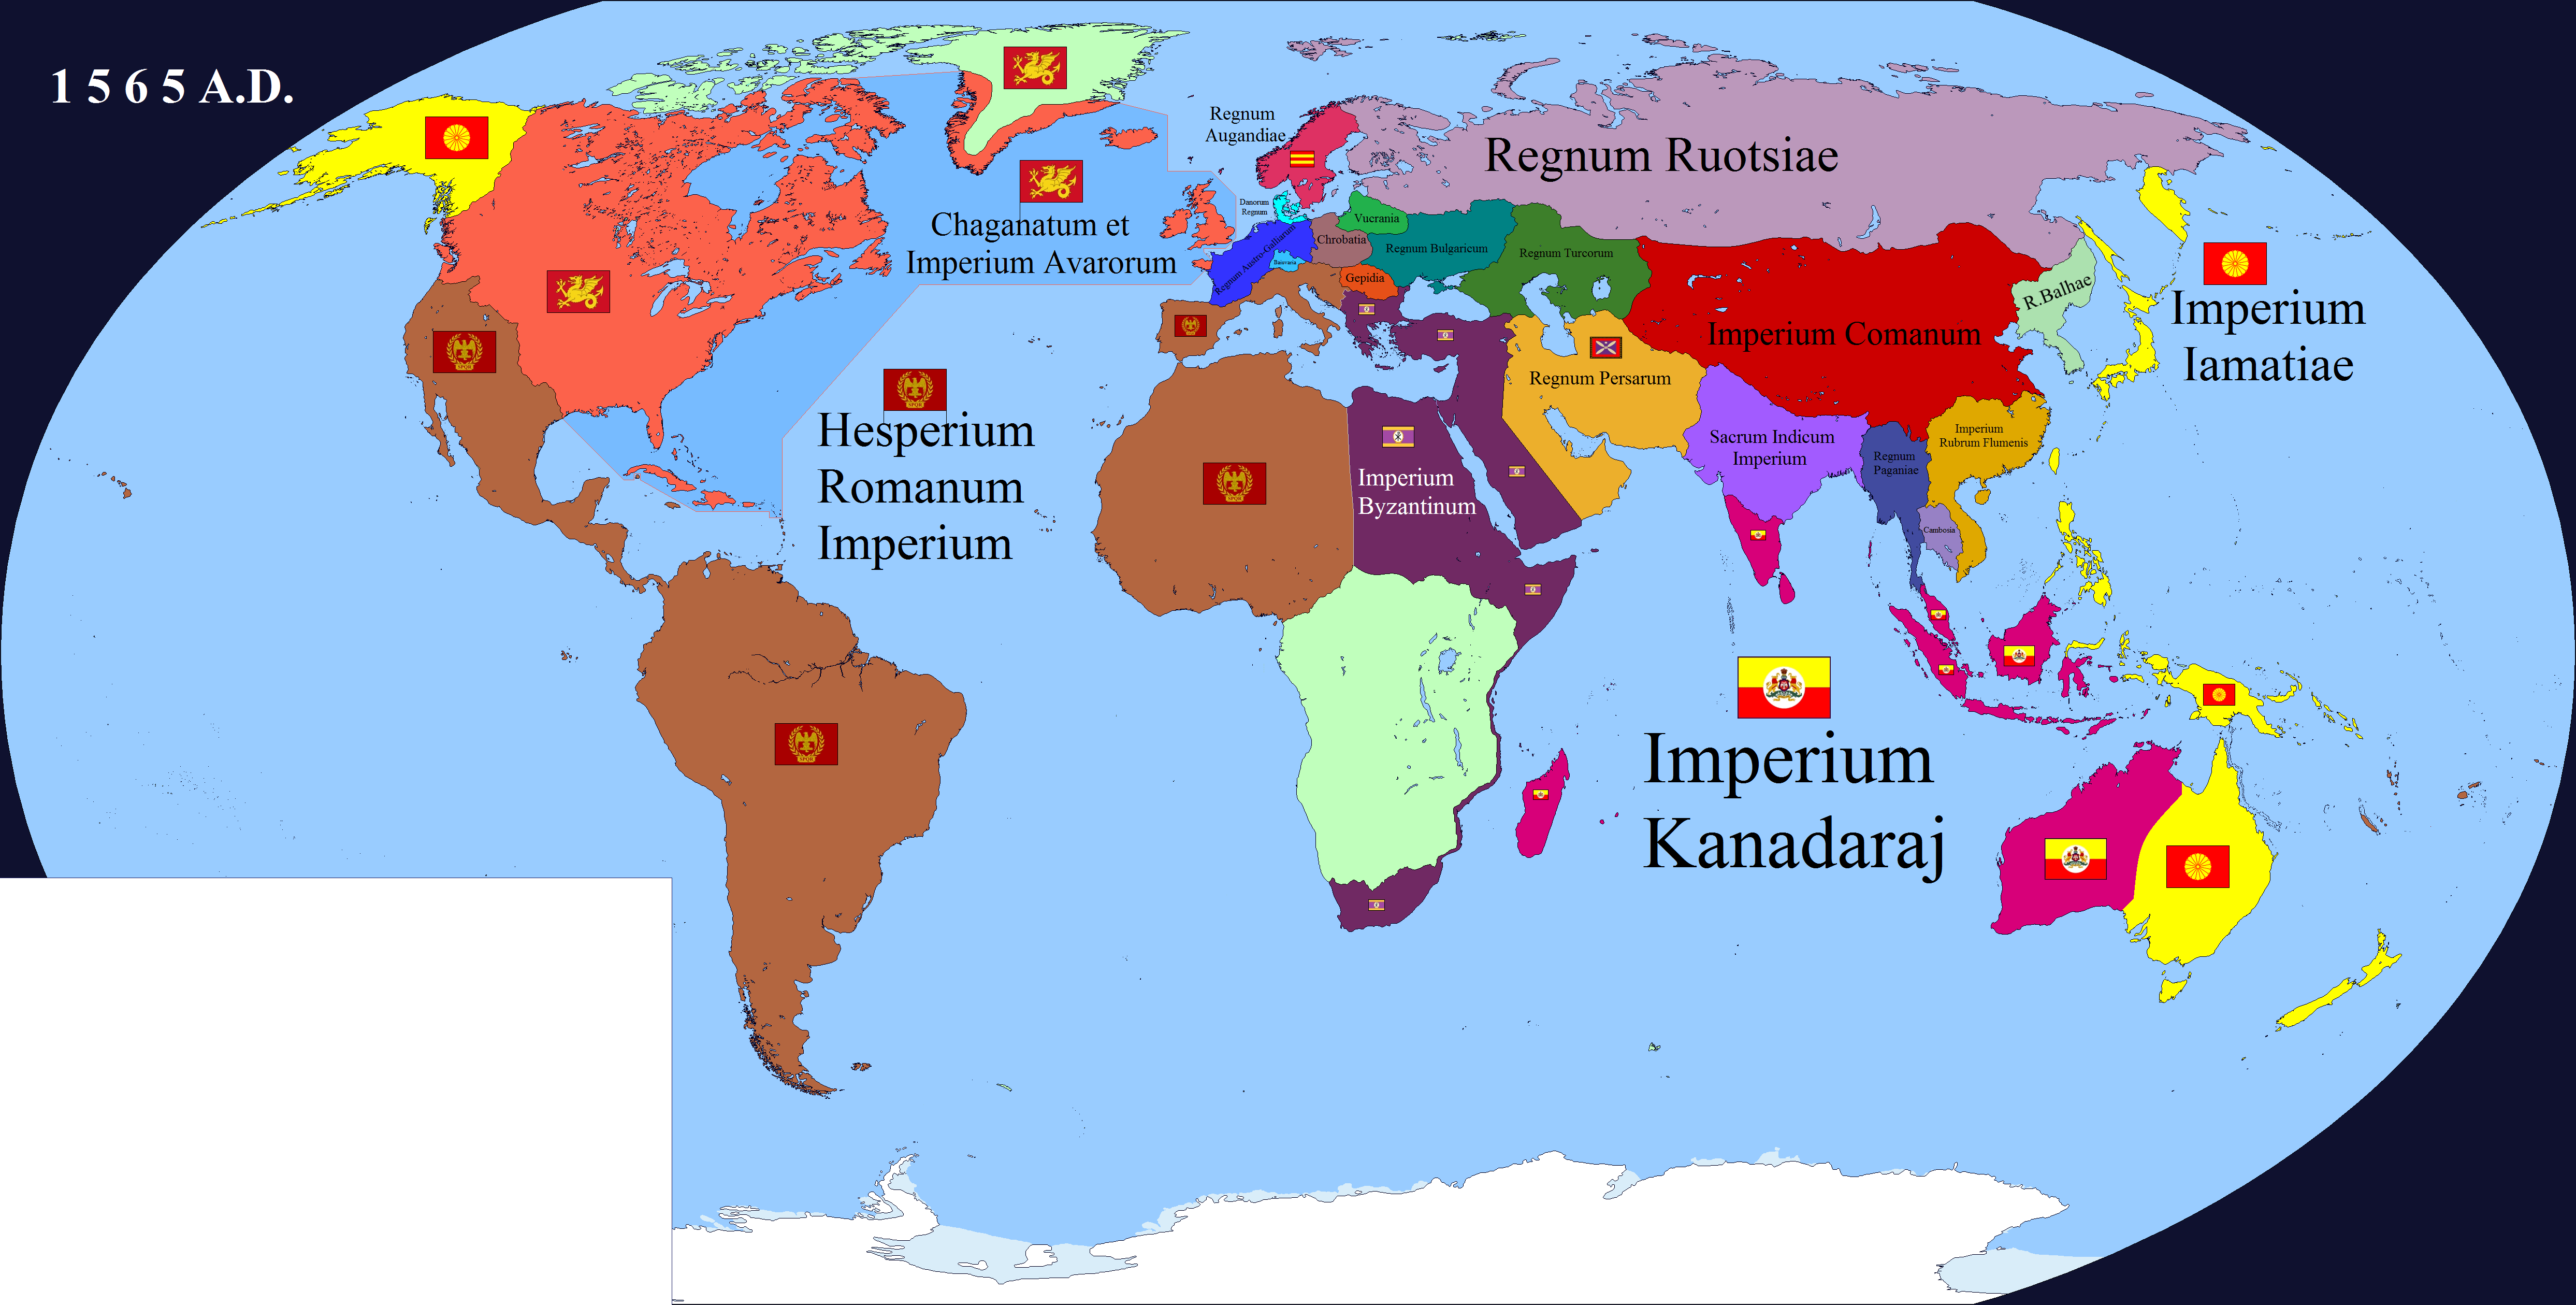 Kannada-Map-for-web.png.bbe5b181b37fd15b